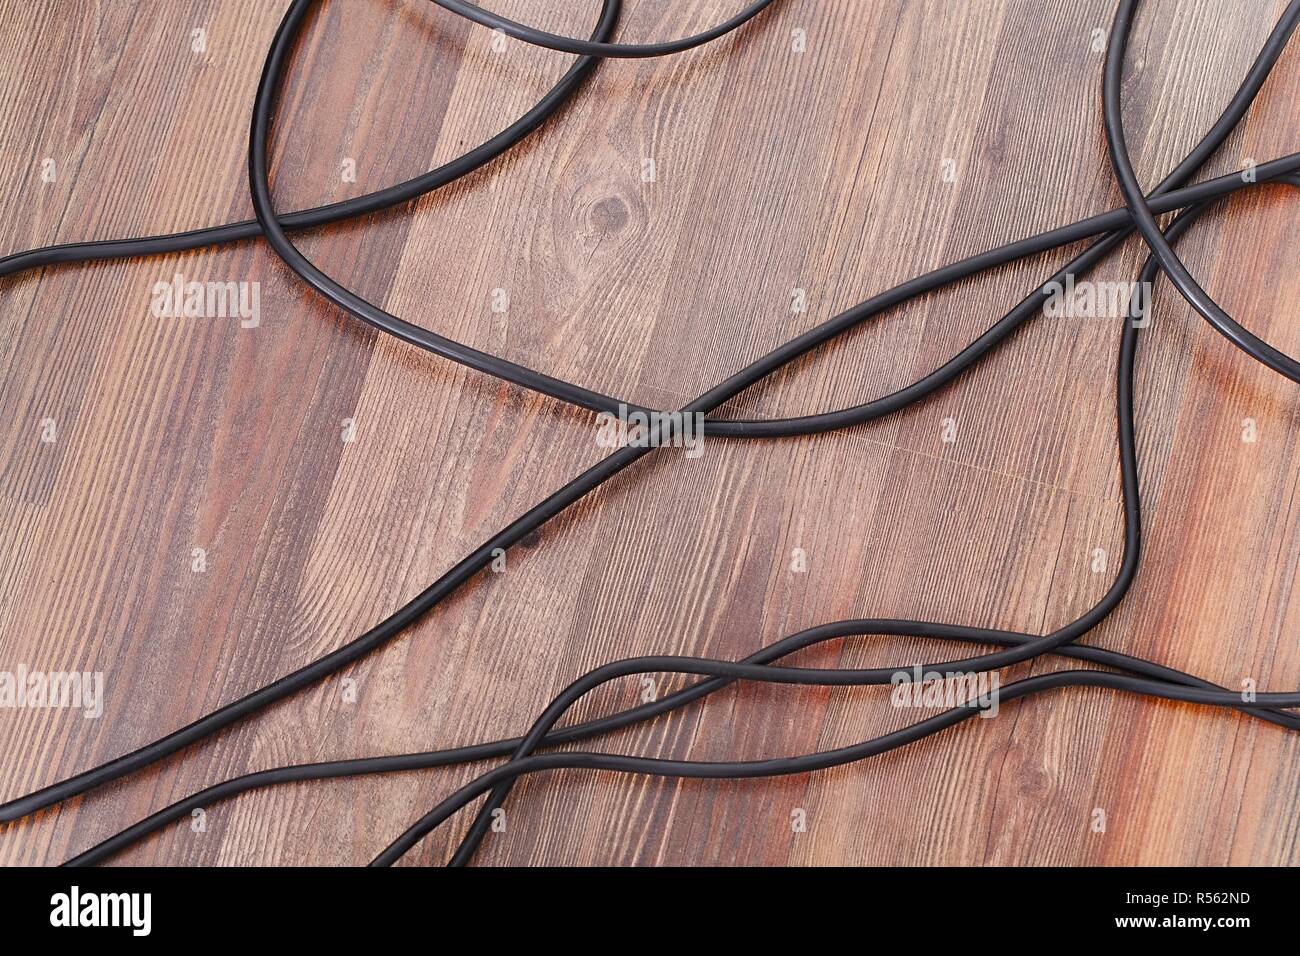 Kabel auf dem Boden Stockfotografie - Alamy